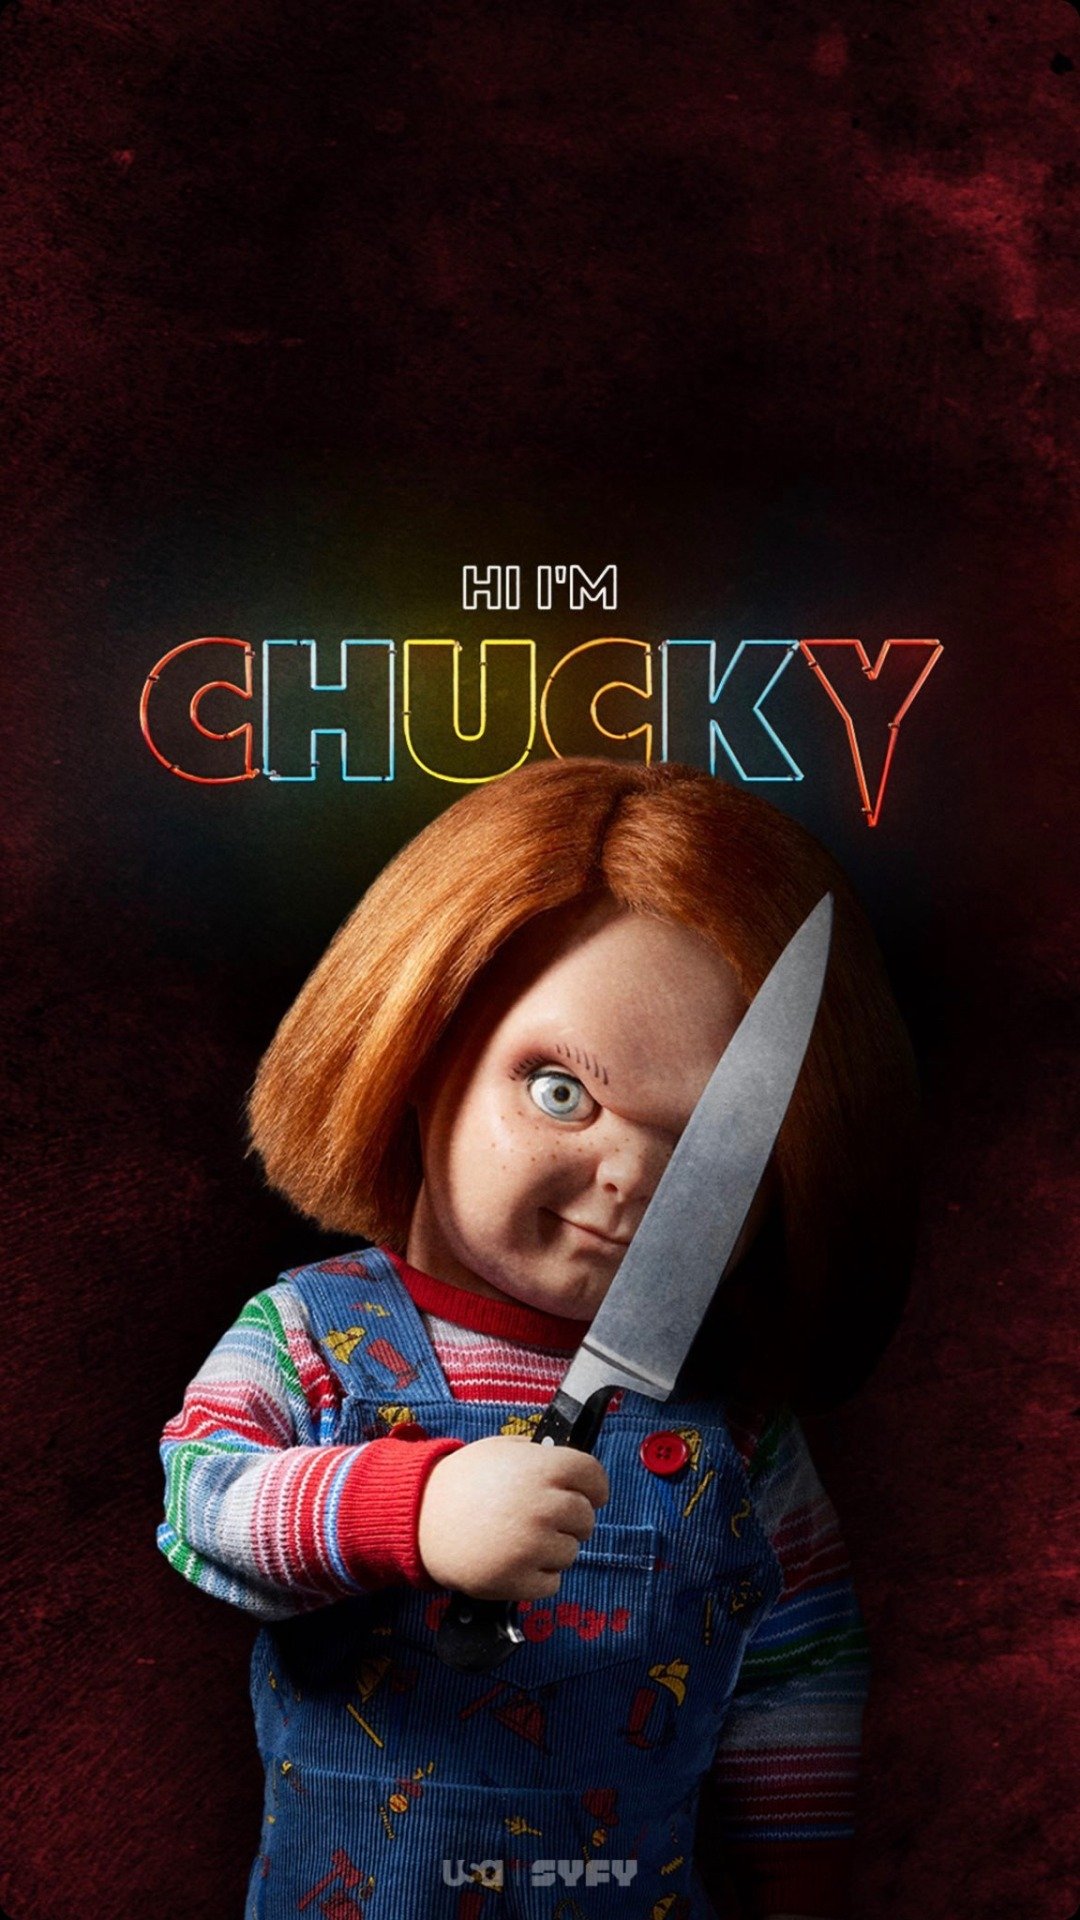 Chucky doll scary nope halloween horrormovies wallpaper wp4403477